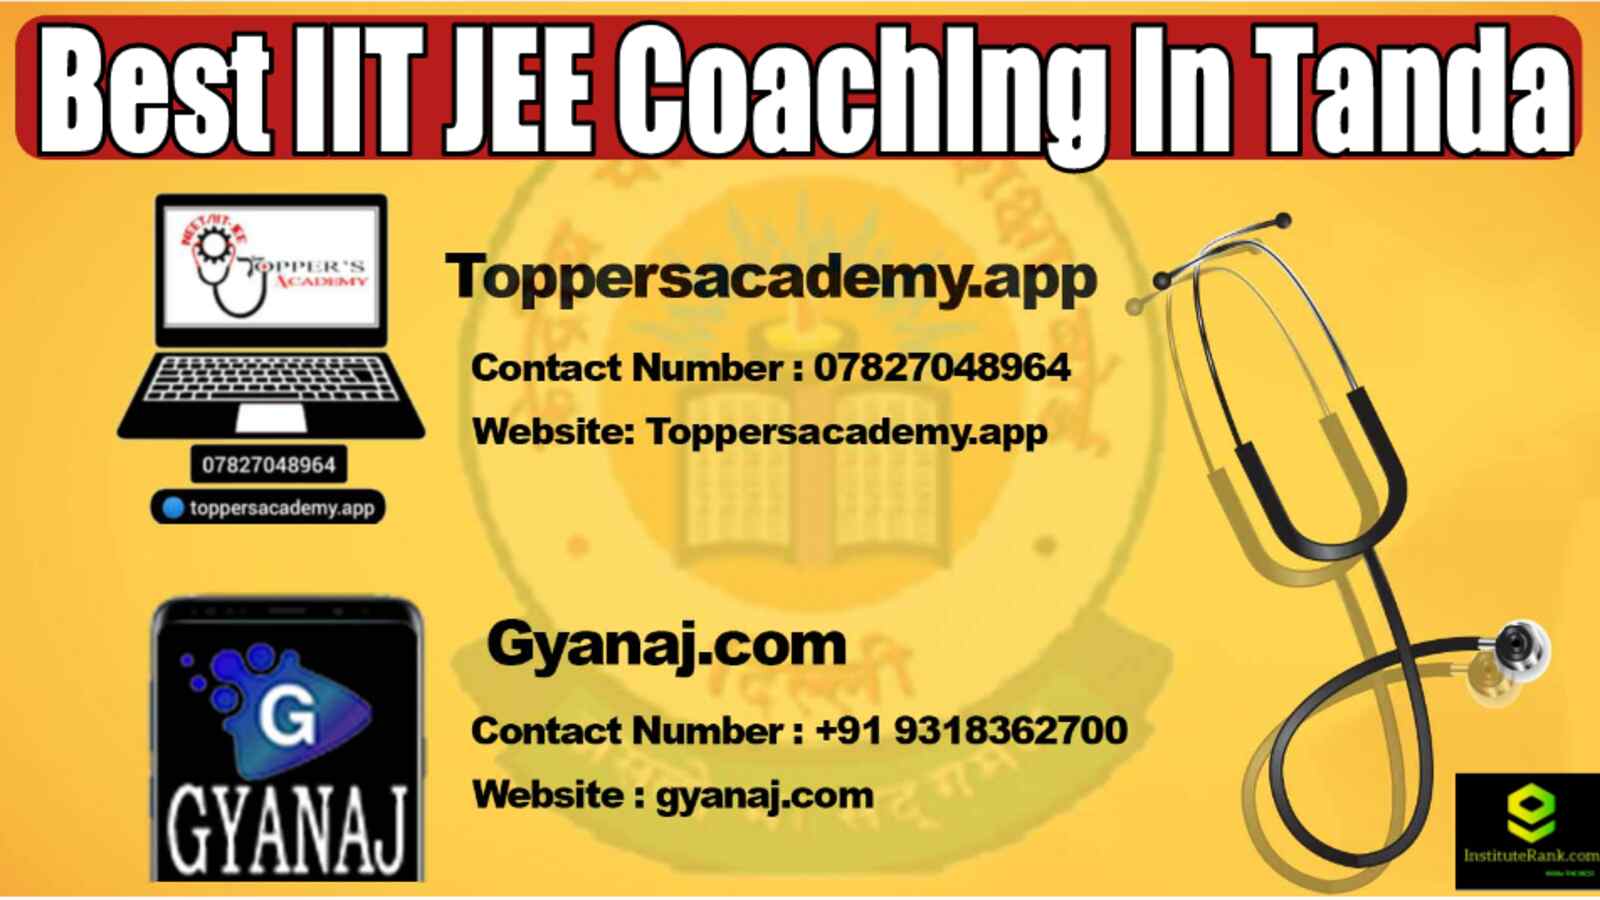 Best IIT JEE Coaching in Tanda 2022